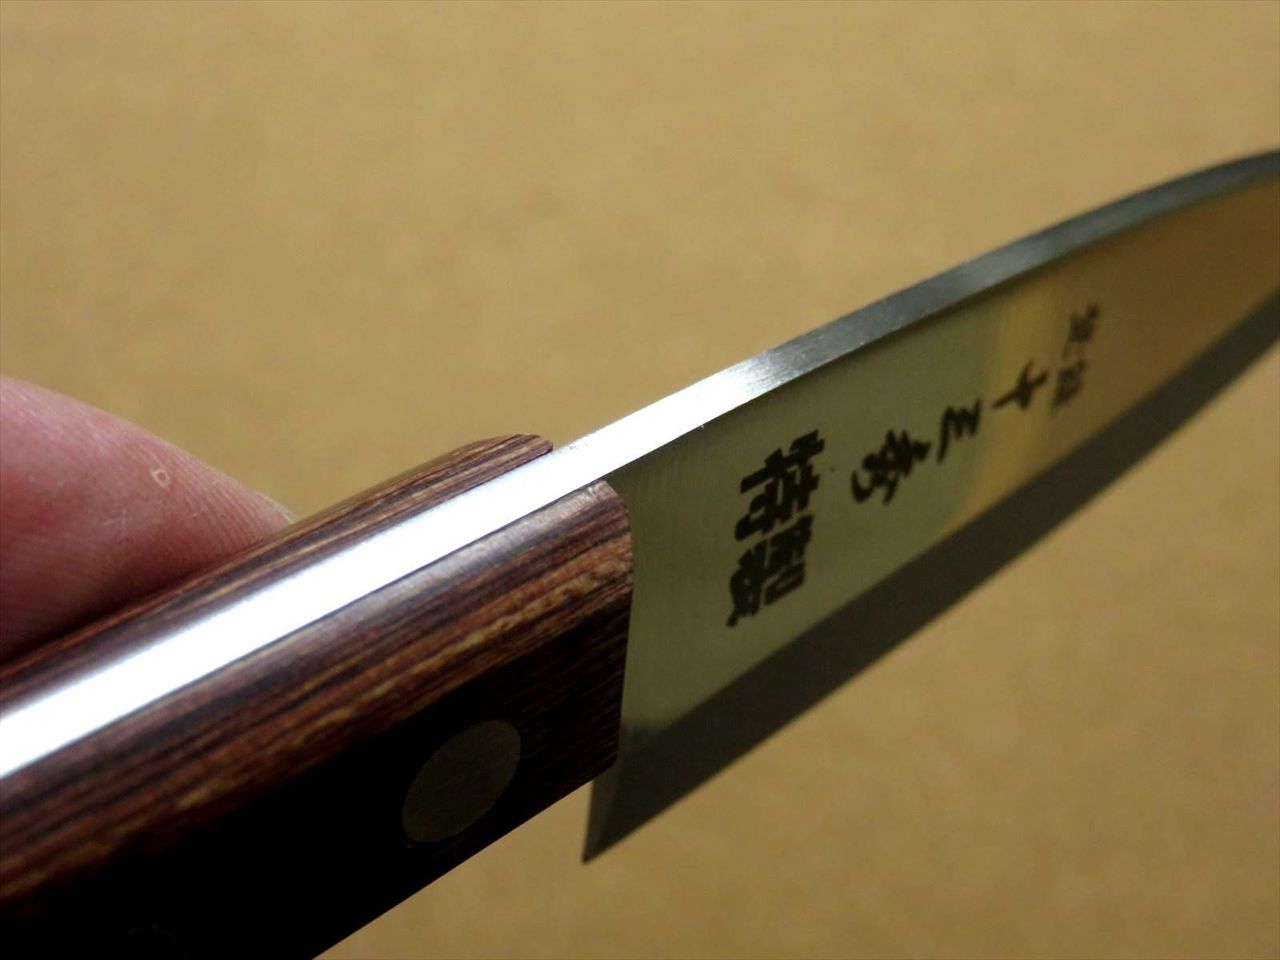 Japanese Kiyotsuna Kitchen Deba Knife 9 inch Single edged Right handed JAPAN